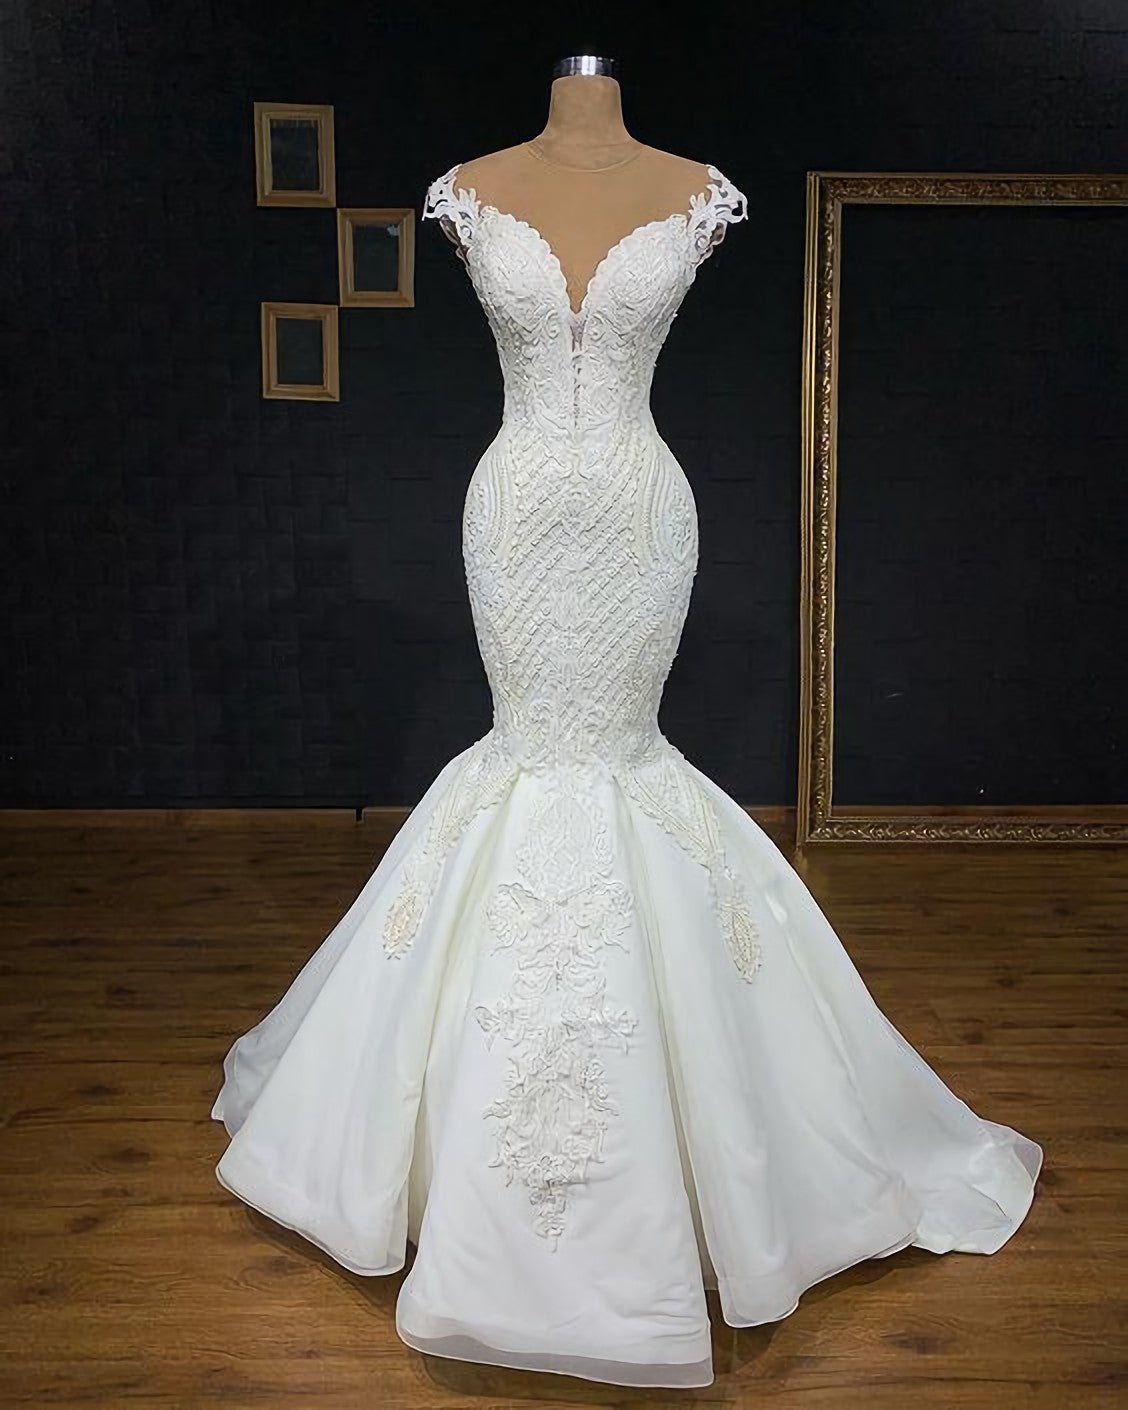 Stunning Corset Prom Dresses, Corset Wedding Party Dresses, Sweet Dresses outfit, Wedding Dress For